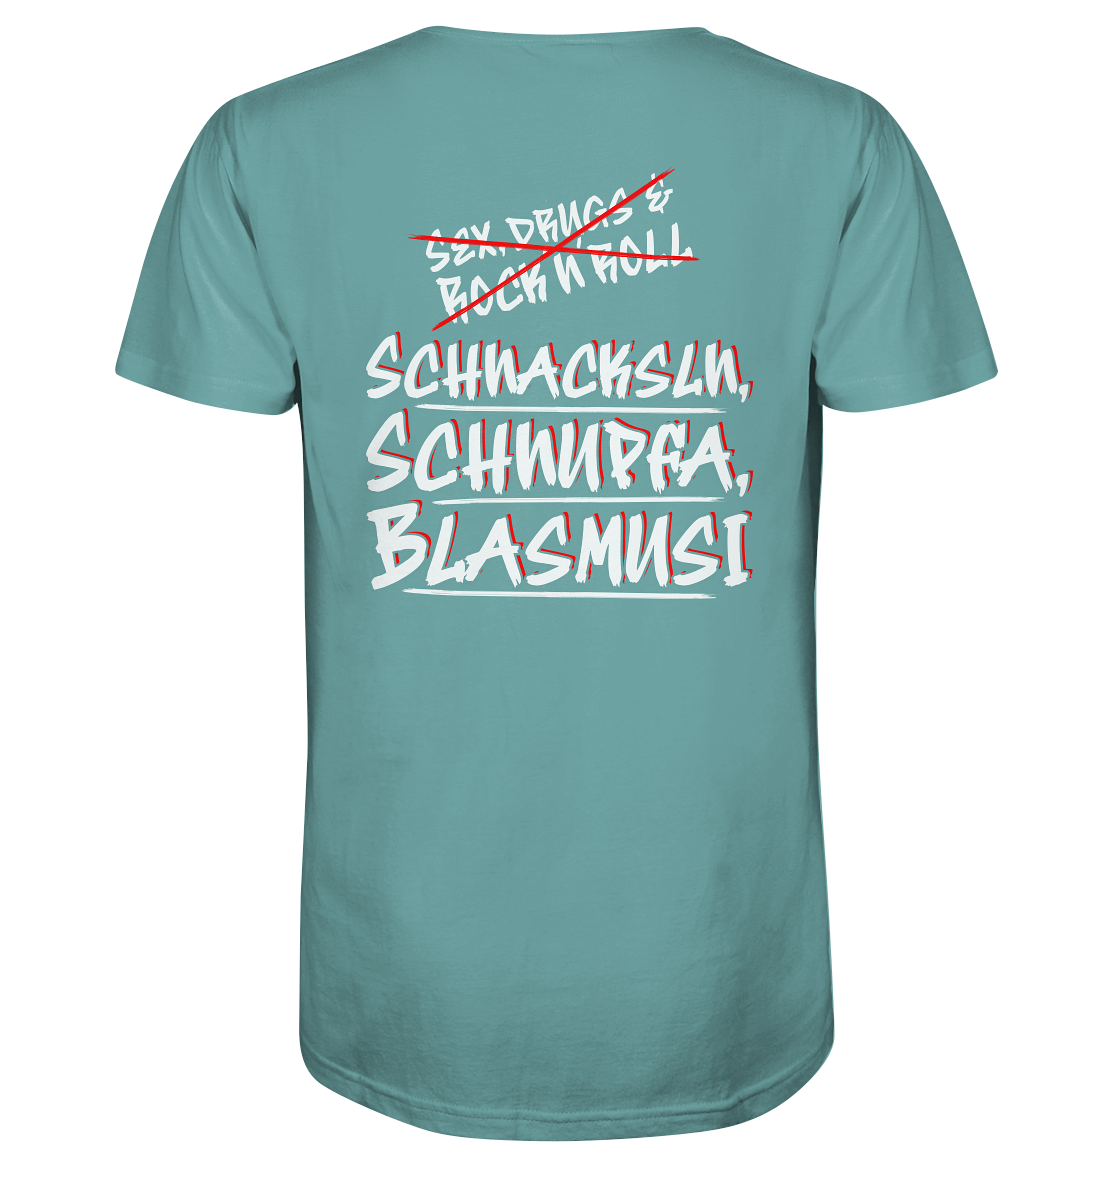 #BLASMUSI - Organic Shirt